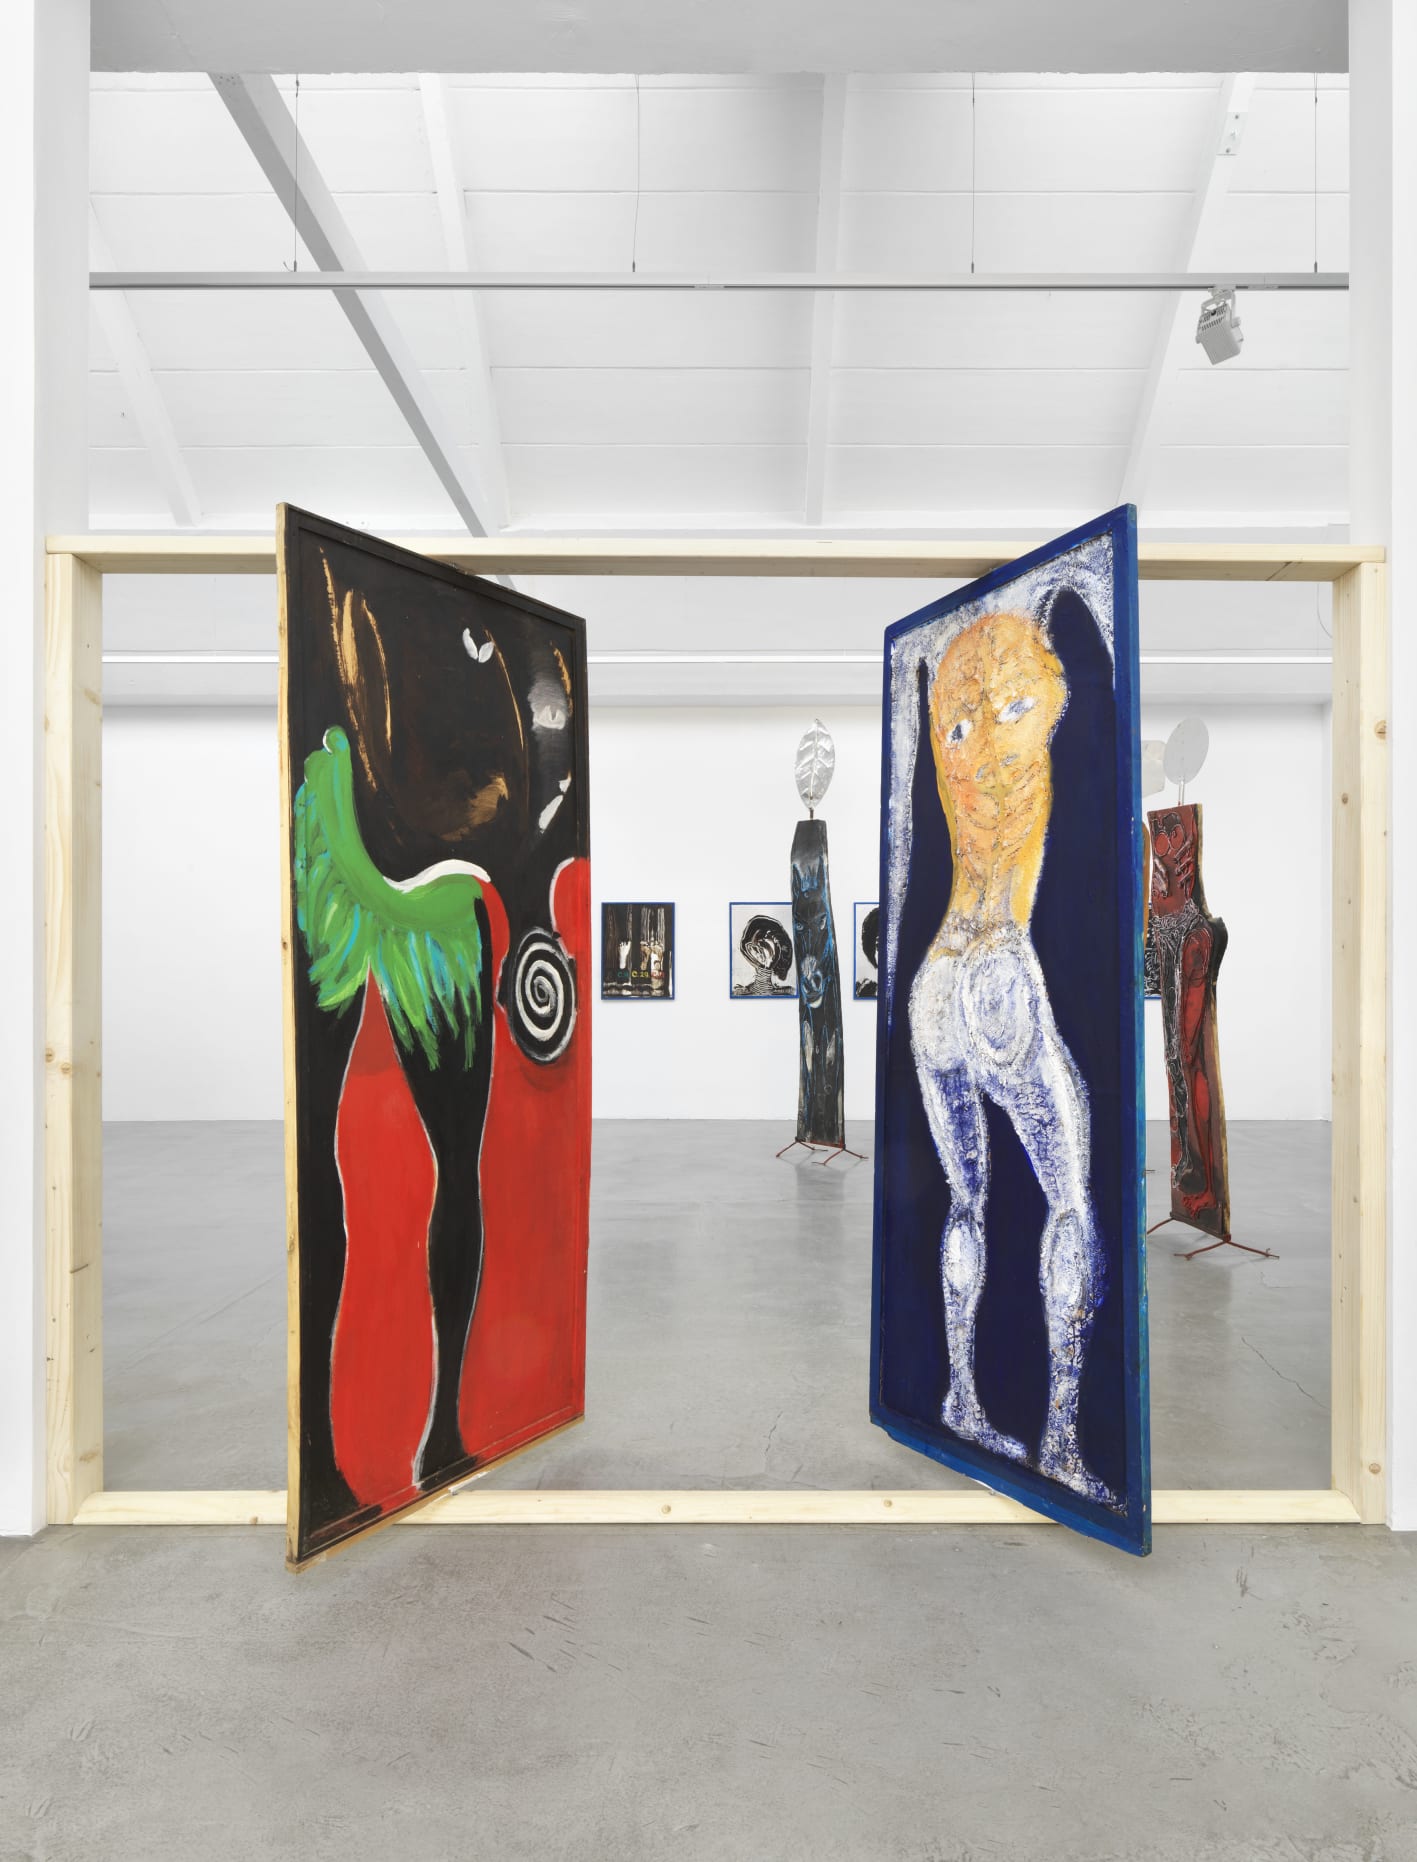 El Hadji Sy Untiled, 2019, Installation, Acrylic on wood, 400.0 x 200.0 x 29.0 (cm), 157.5 x 78.7 x 11.4 (inch), USD 100,001 – 200,000 at Galerie Barbara Thumm